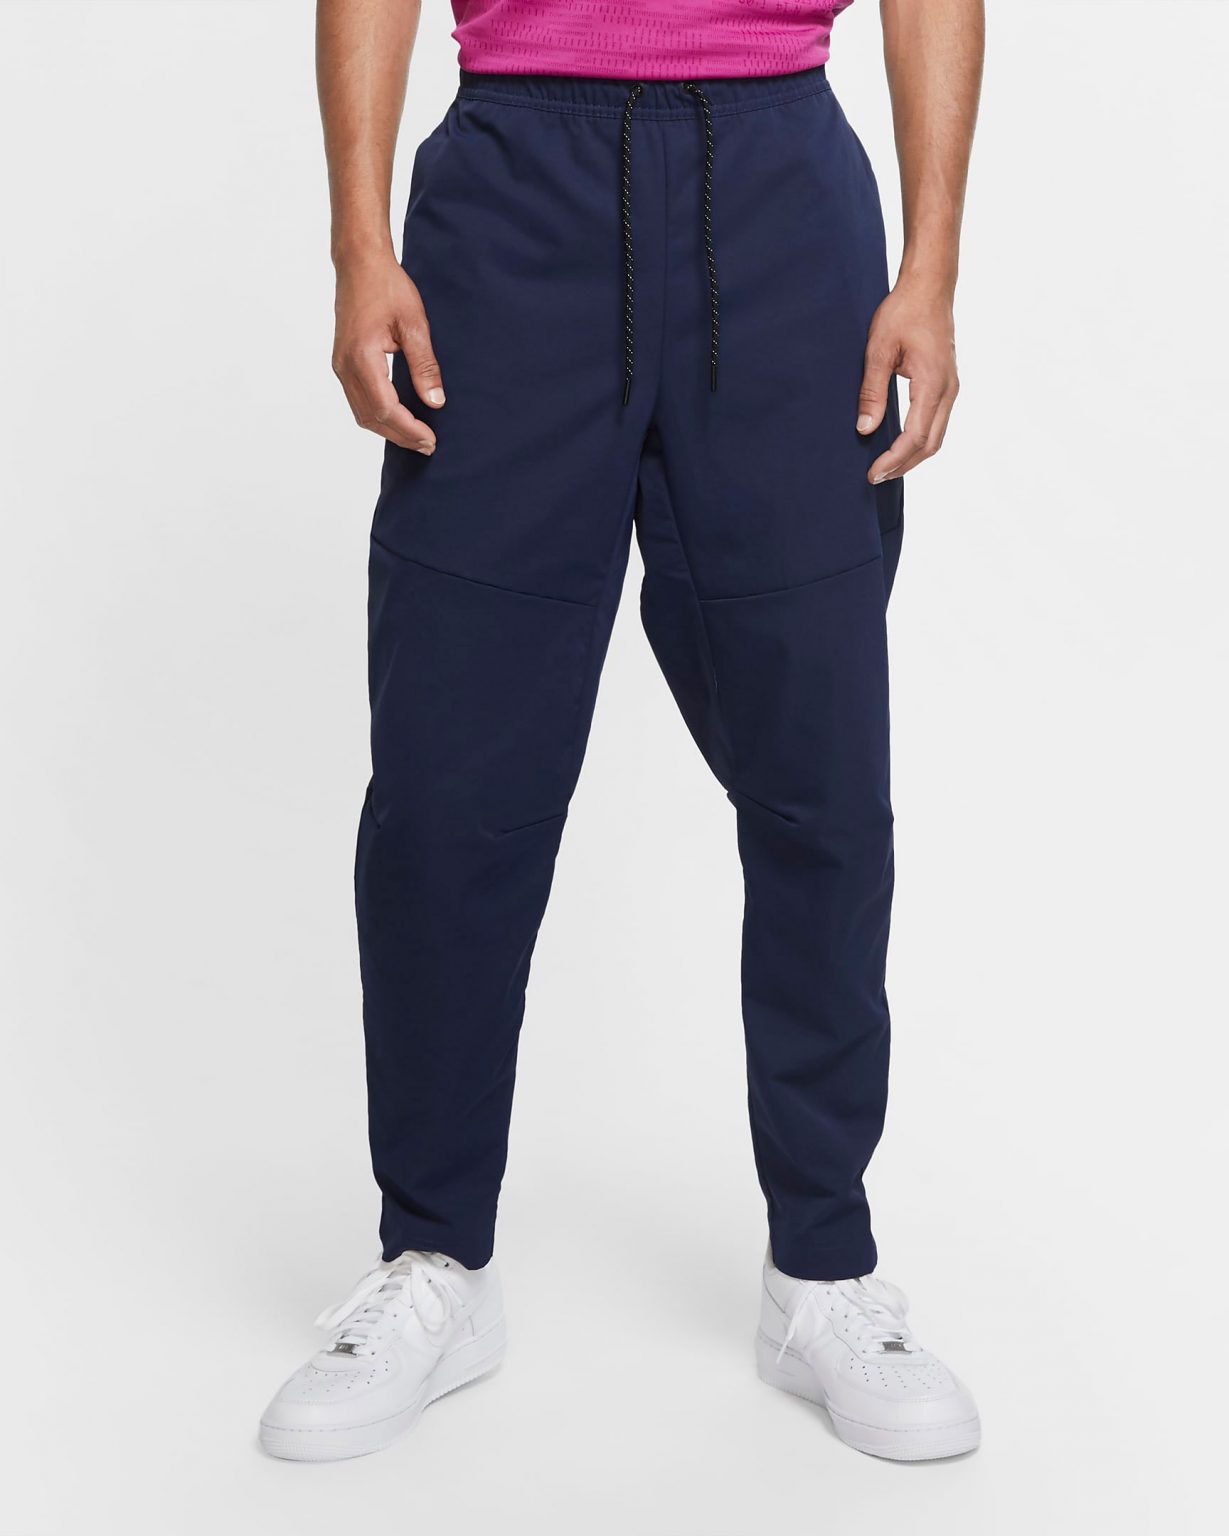 Air Jordan 1 Midnight Navy Pants to Match | SneakerFits.com